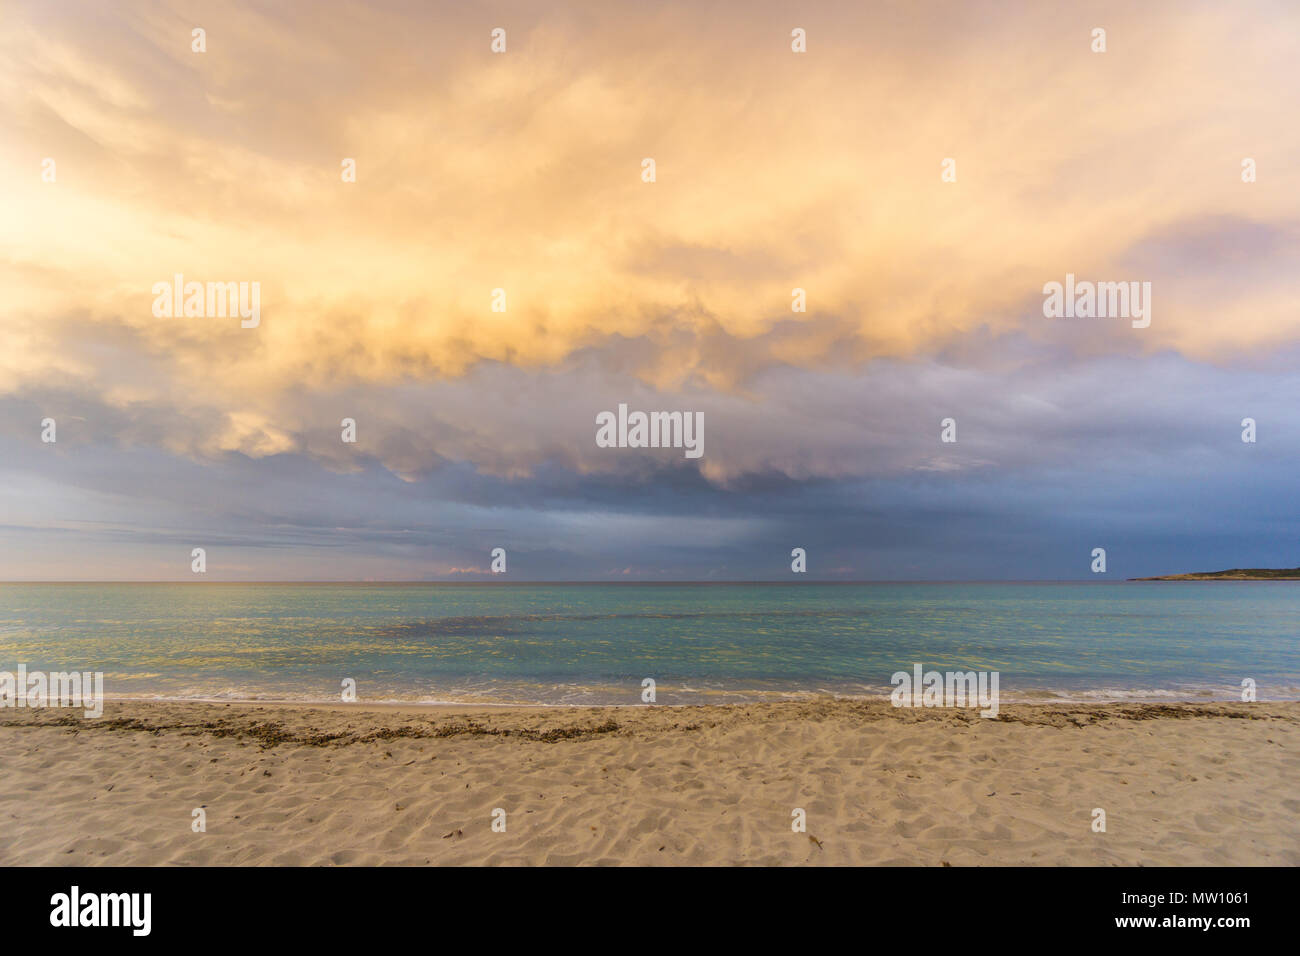 Mallorca, stürmische glänzenden Himmel cloudscape bei Sonnenaufgang am Strand Stockfoto